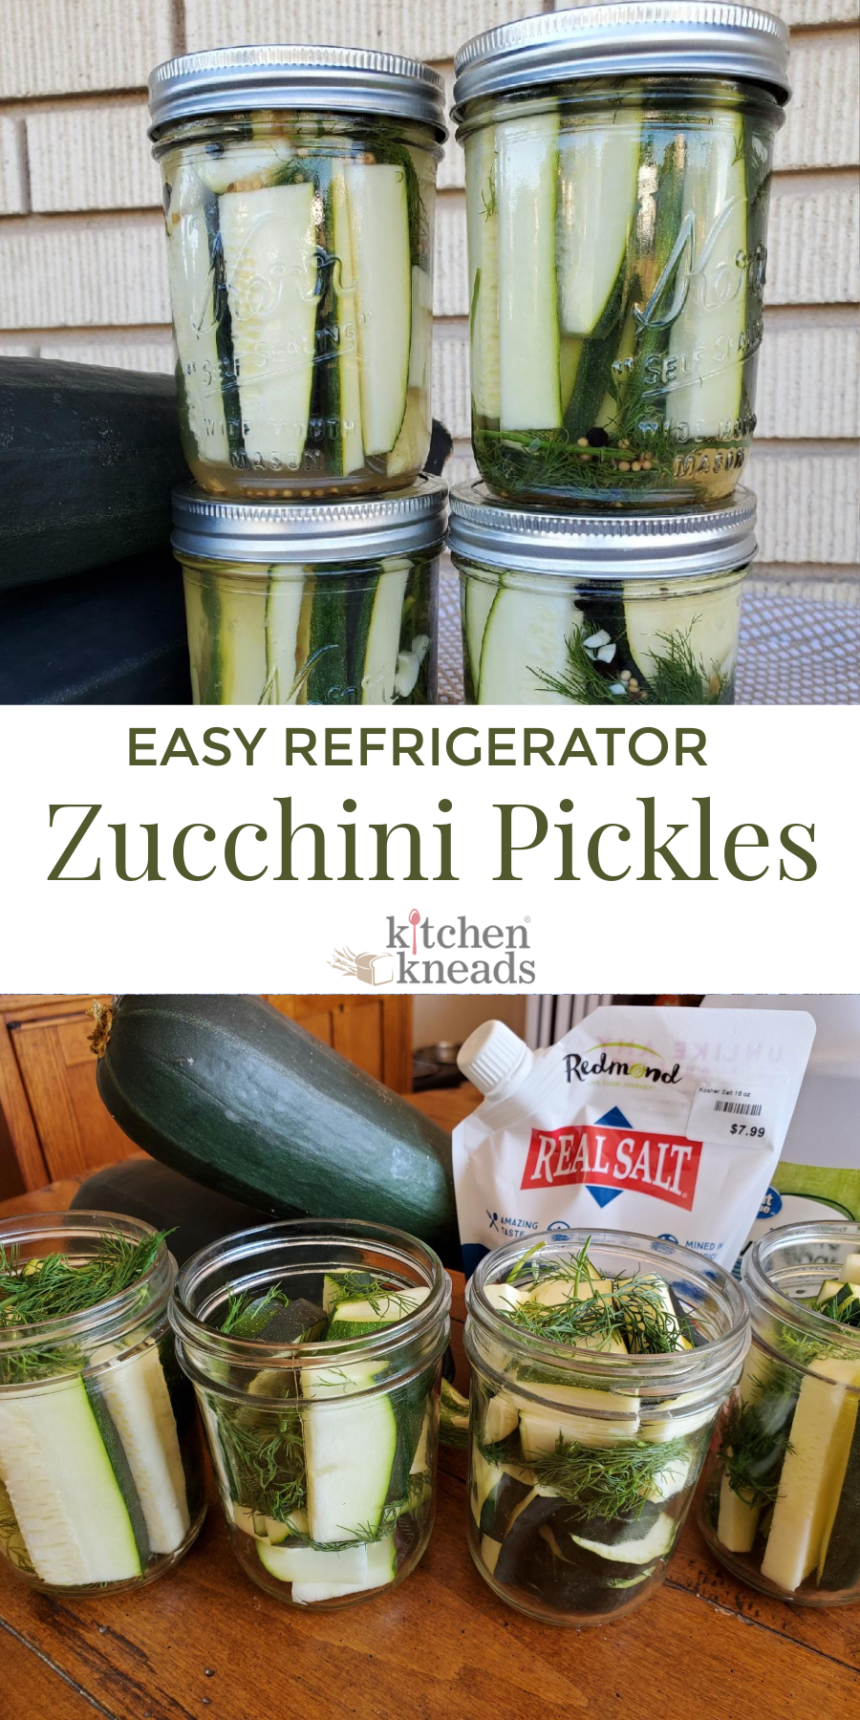 Easy Refrigerator Zucchini Pickles Kitchen Kneads